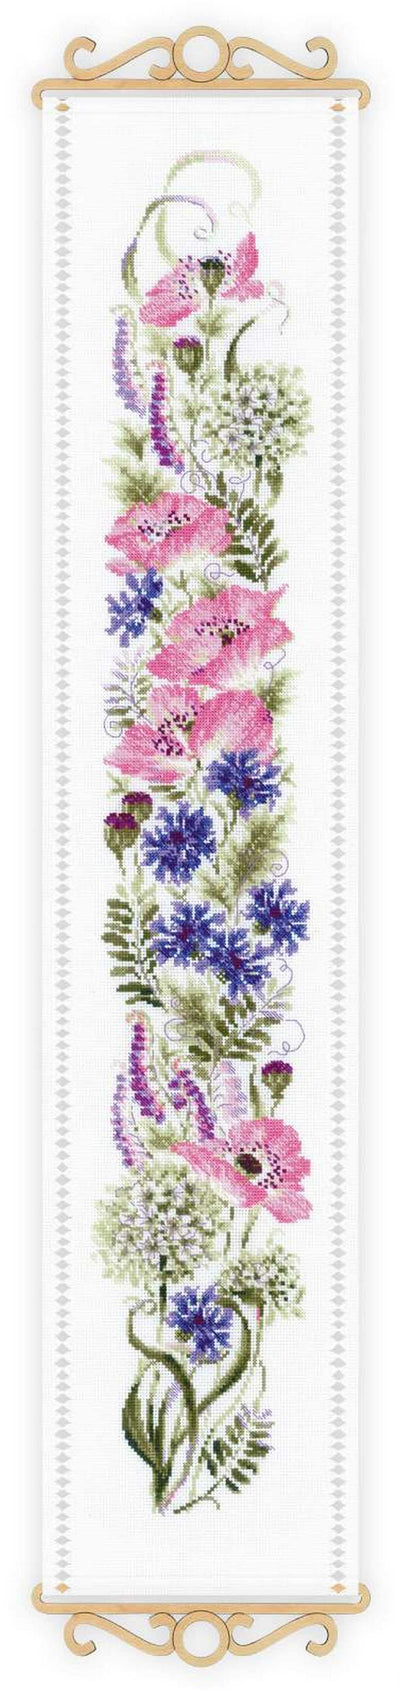 Riolis Cross Stitch Kit - Flower Assortment